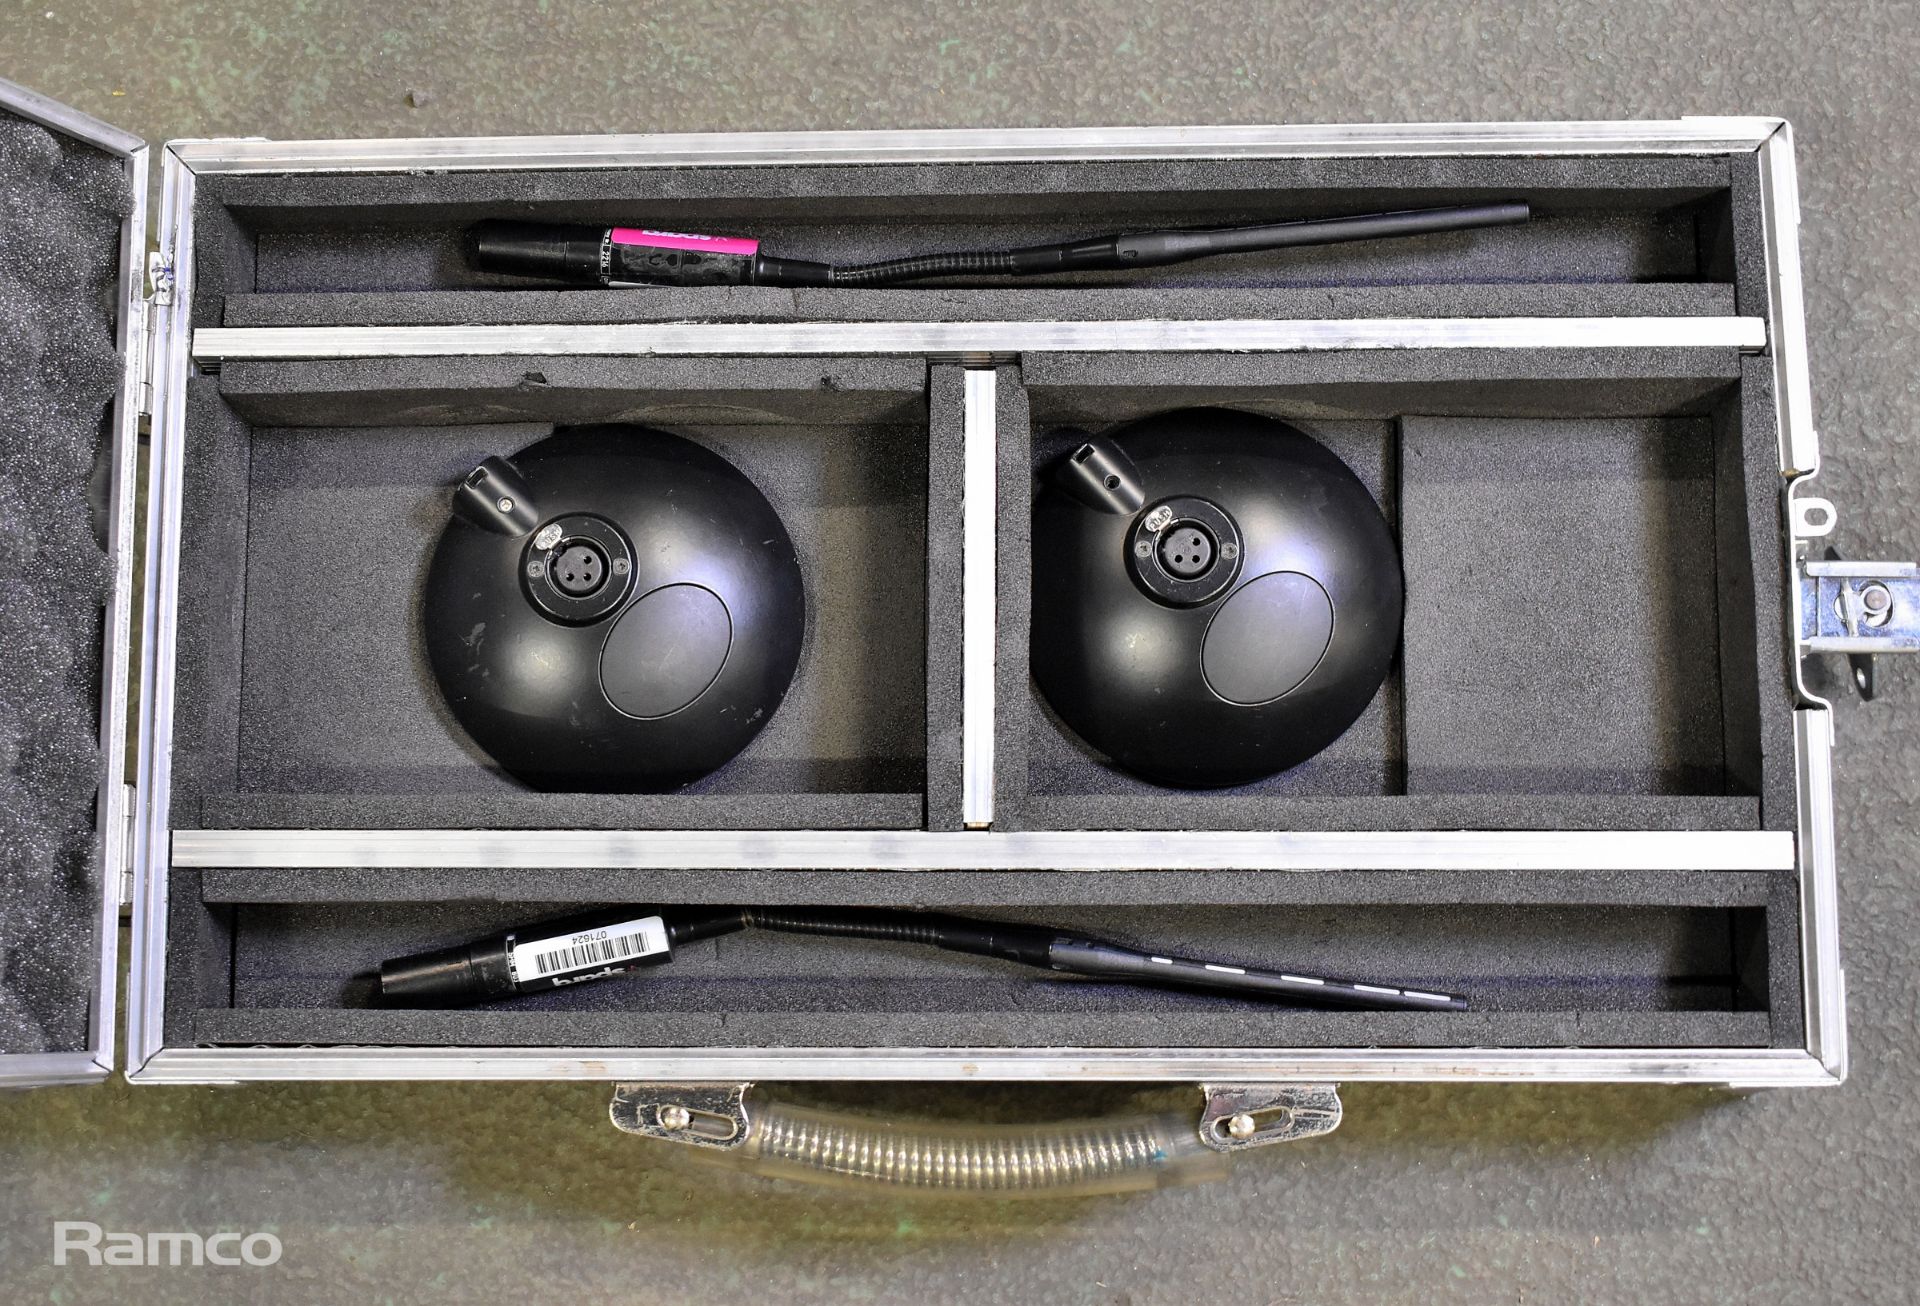 2x Beyerdynamic SHM 803 lectern microphones with base plates in flightcase - 55 x 32 x 15cm - Image 2 of 5